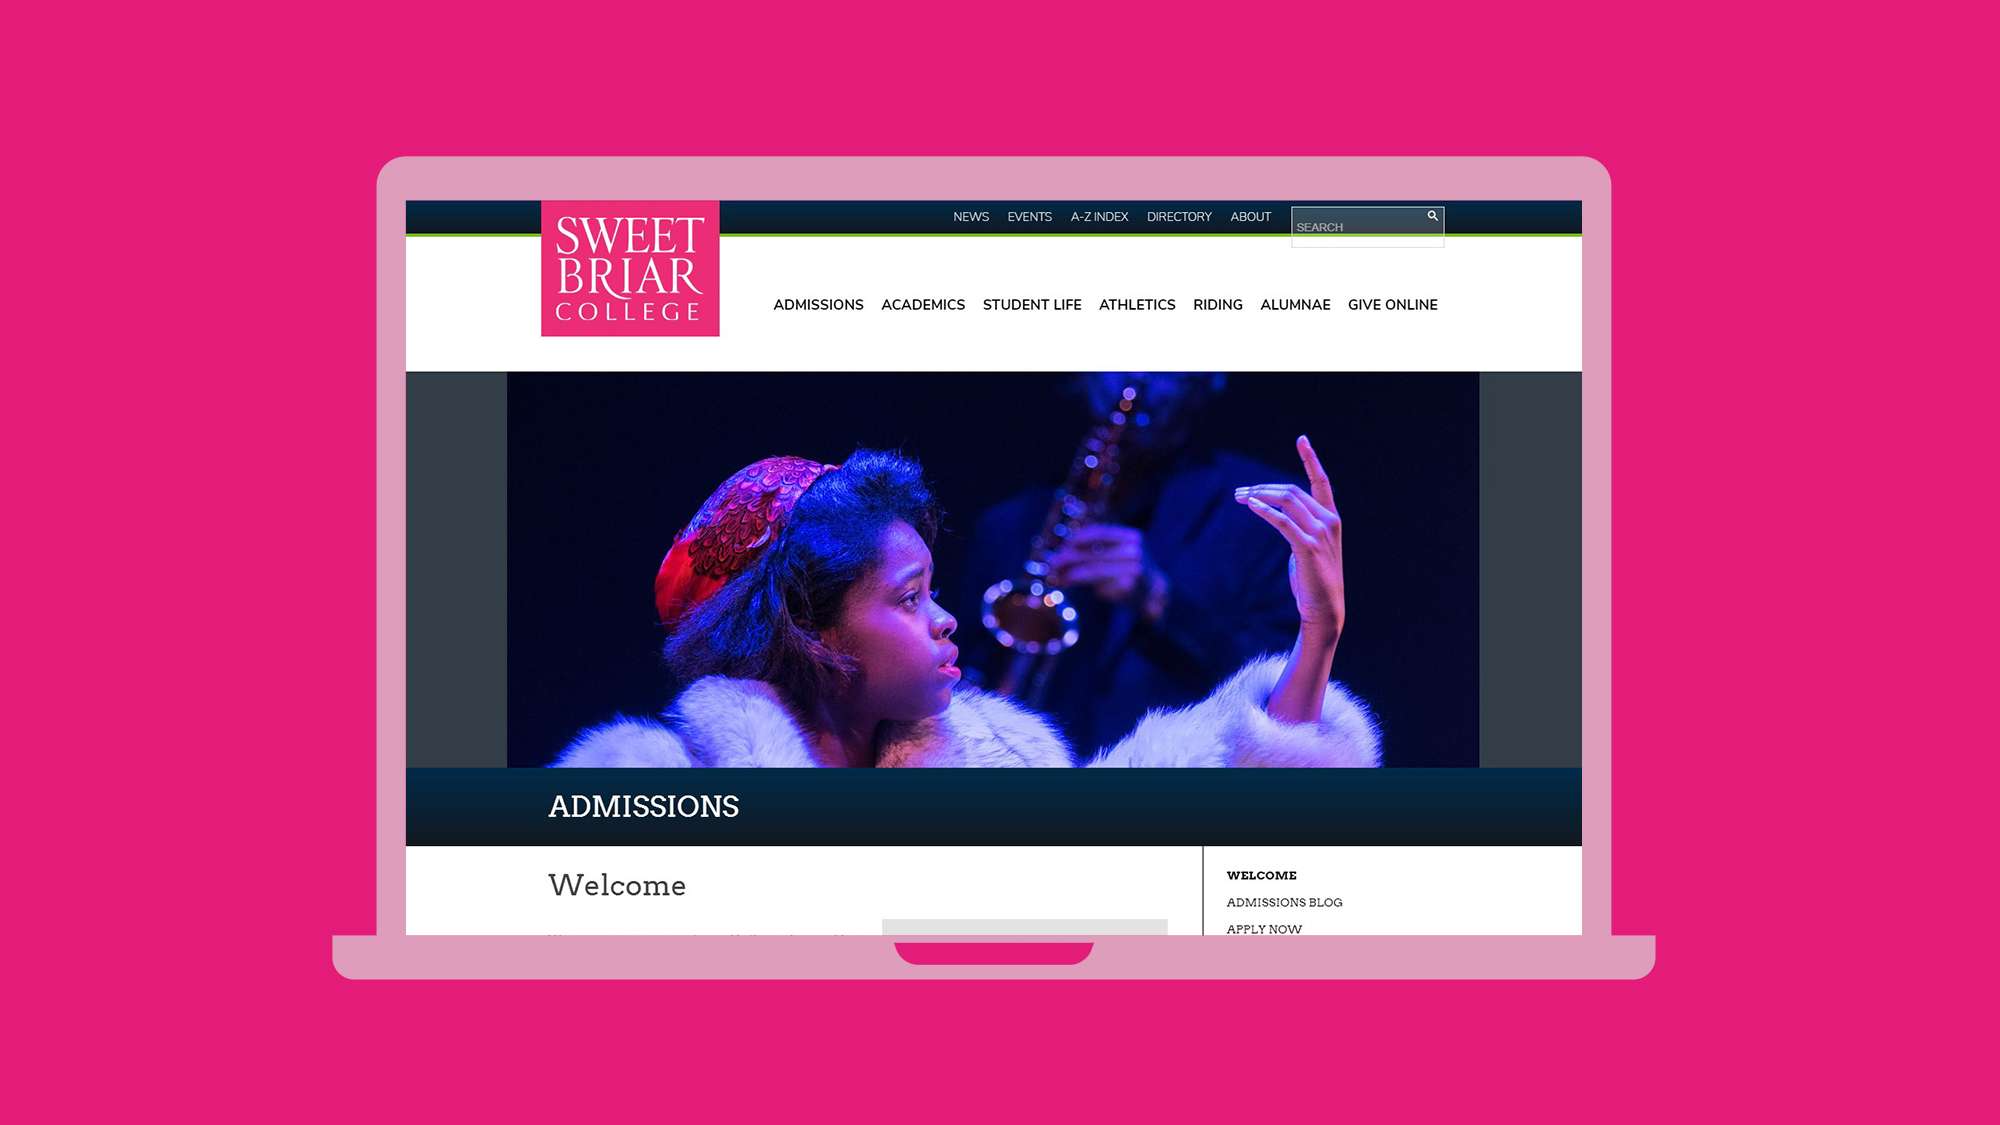 Sweet Briar website screenshot. Shows a black woman in fur acting or singing.